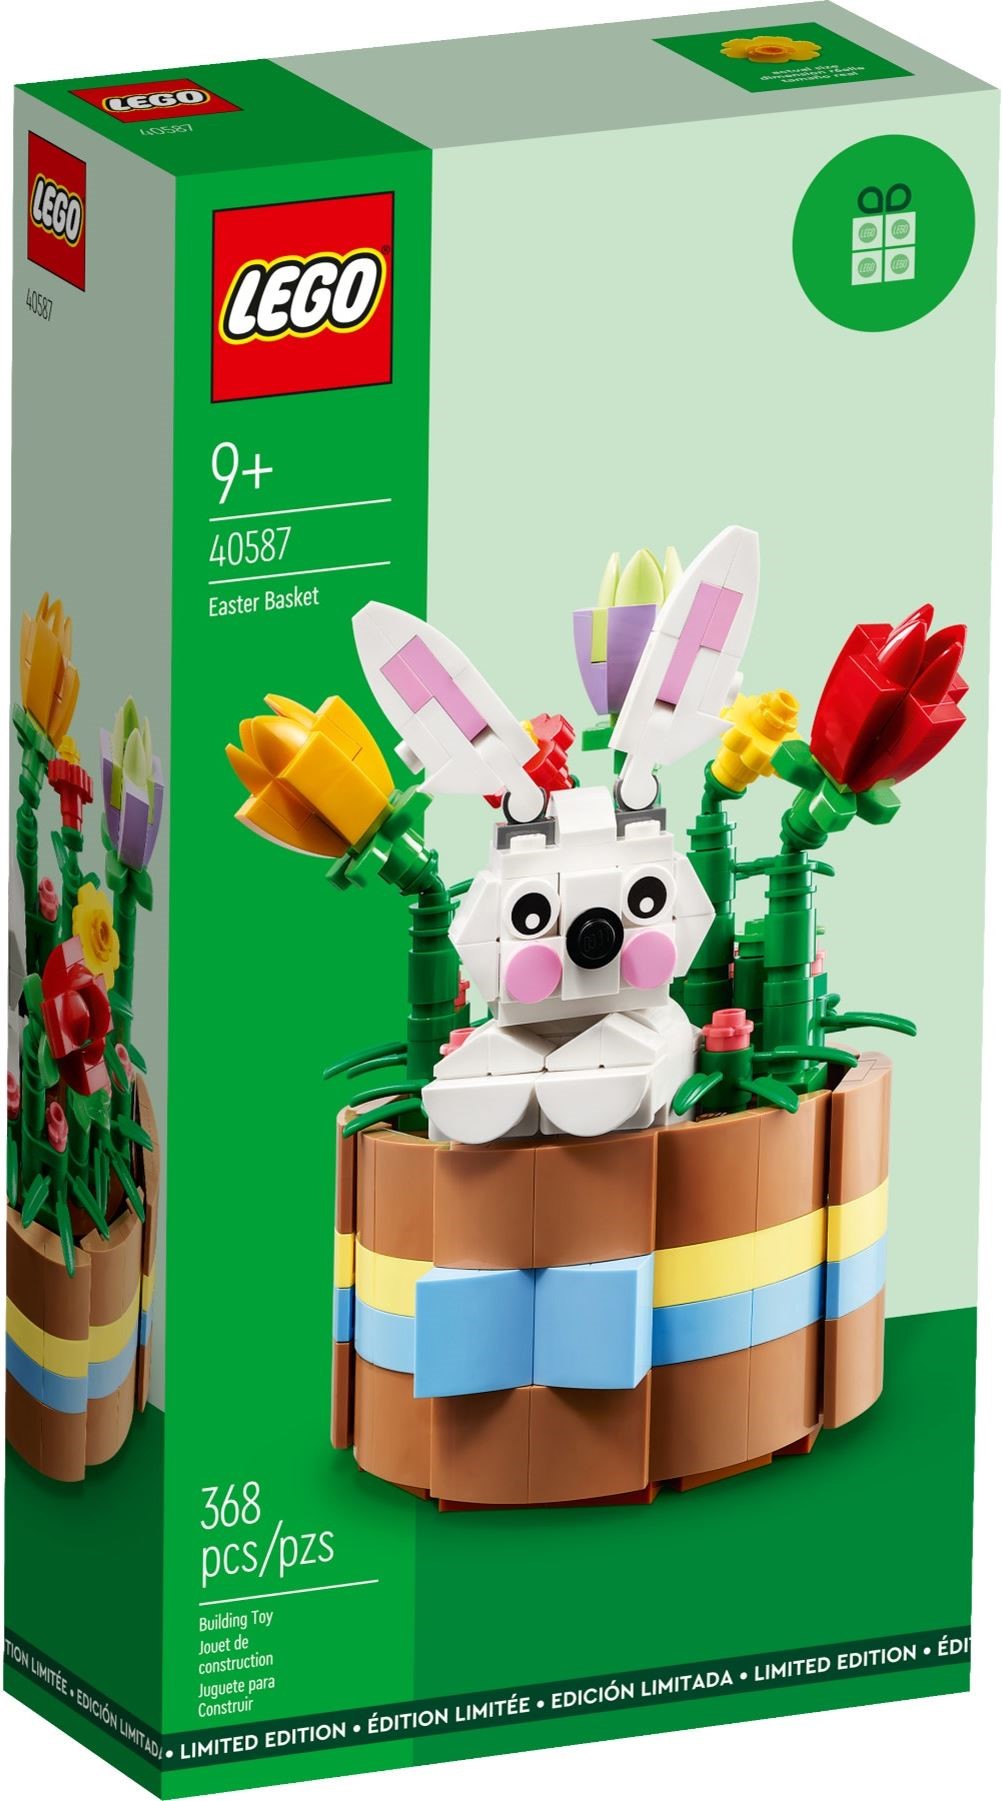 Lego Exclusive 40587 - Easter Basket